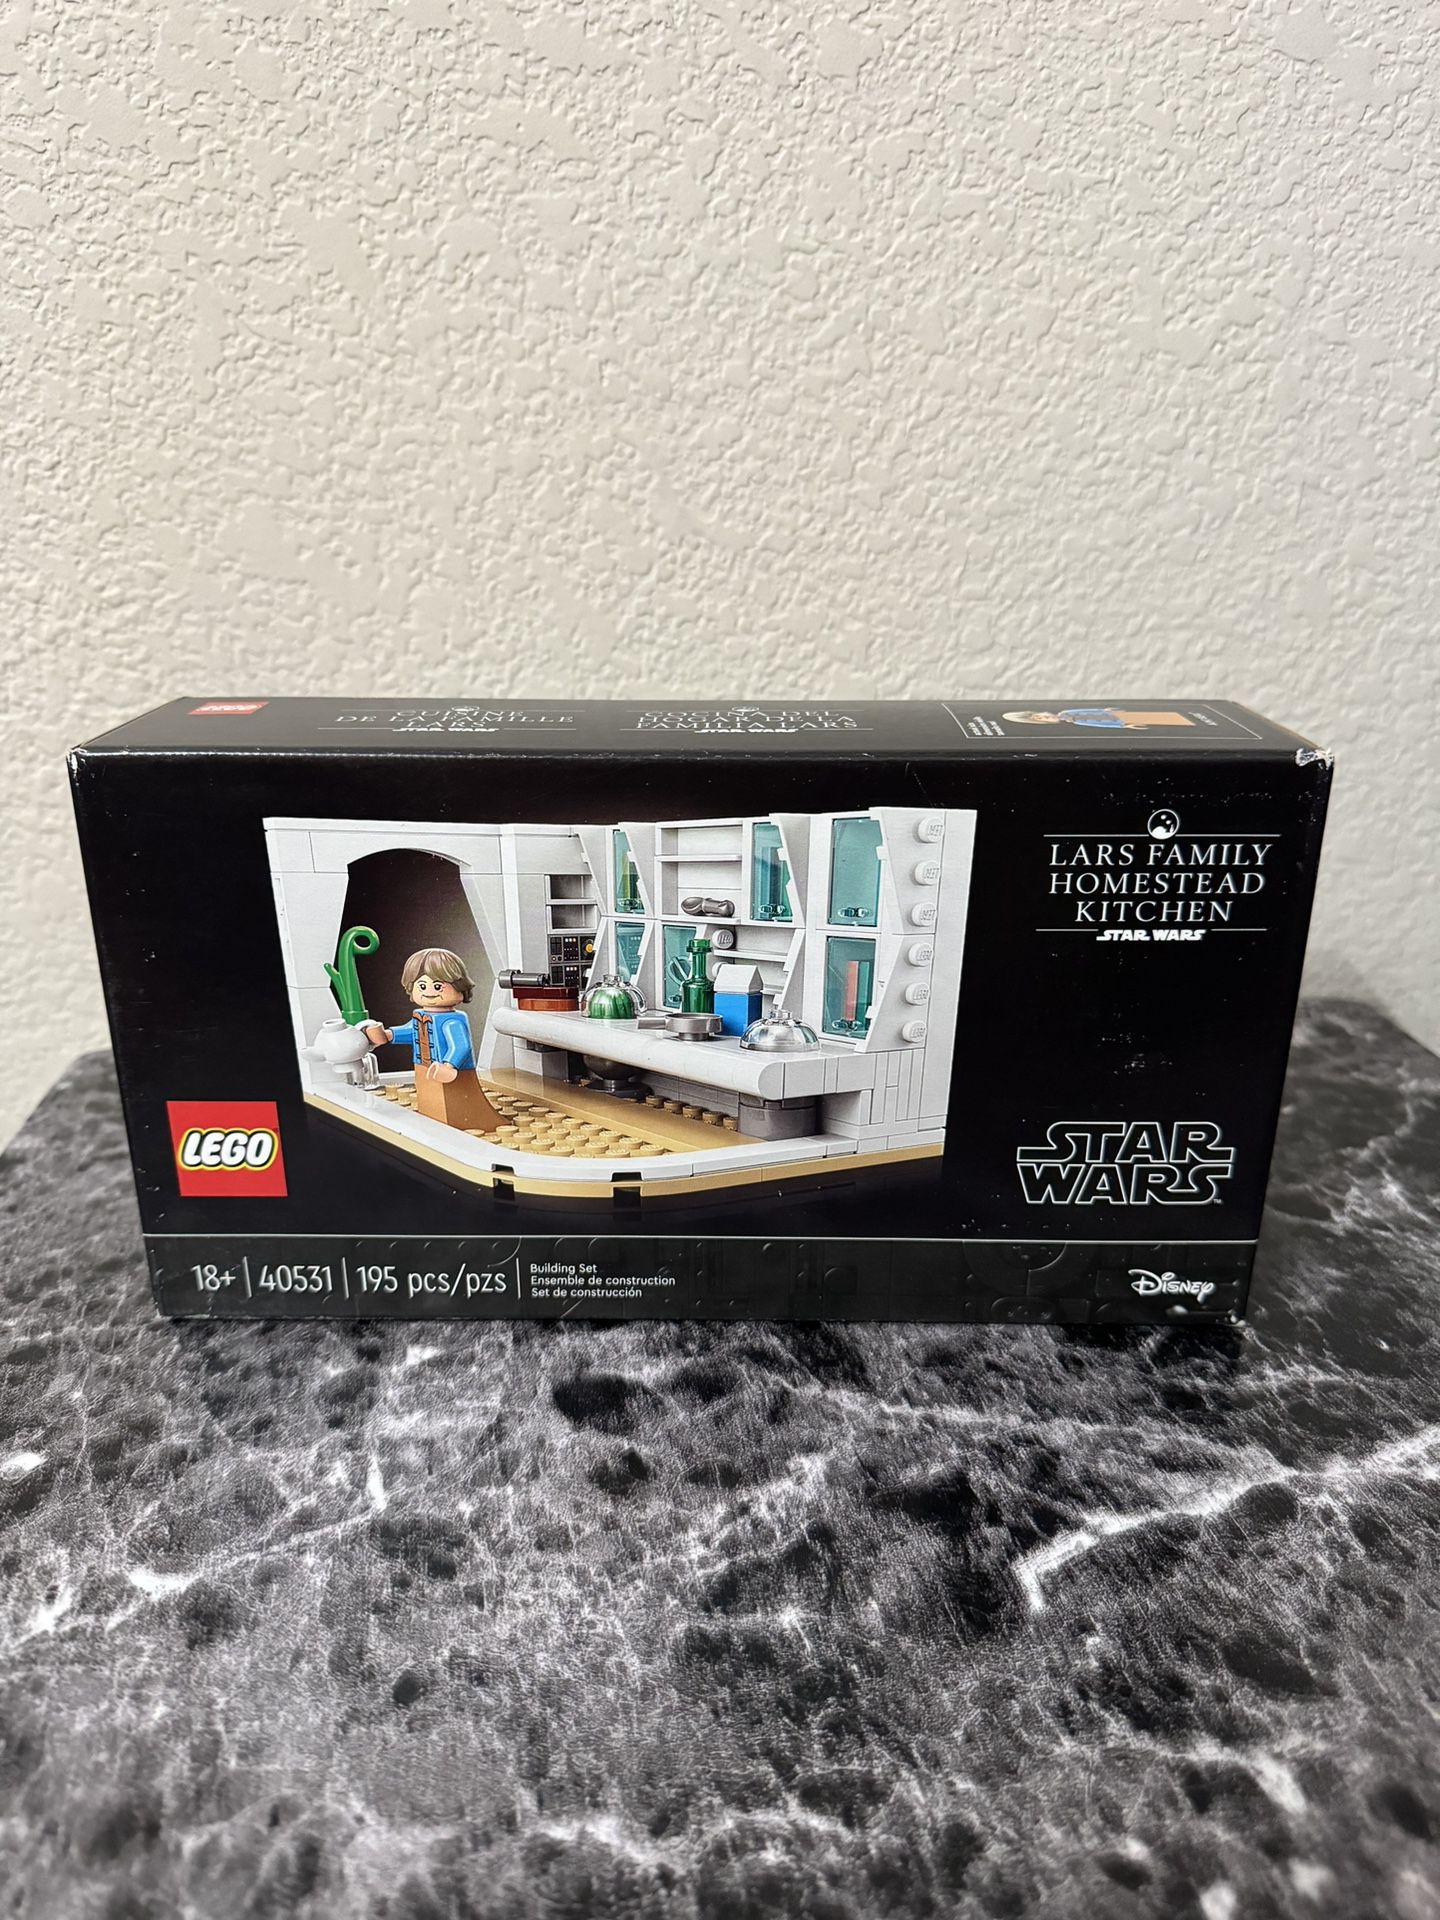 LEGO Star Wars: Lars Family Homestead Kitchen (40531)